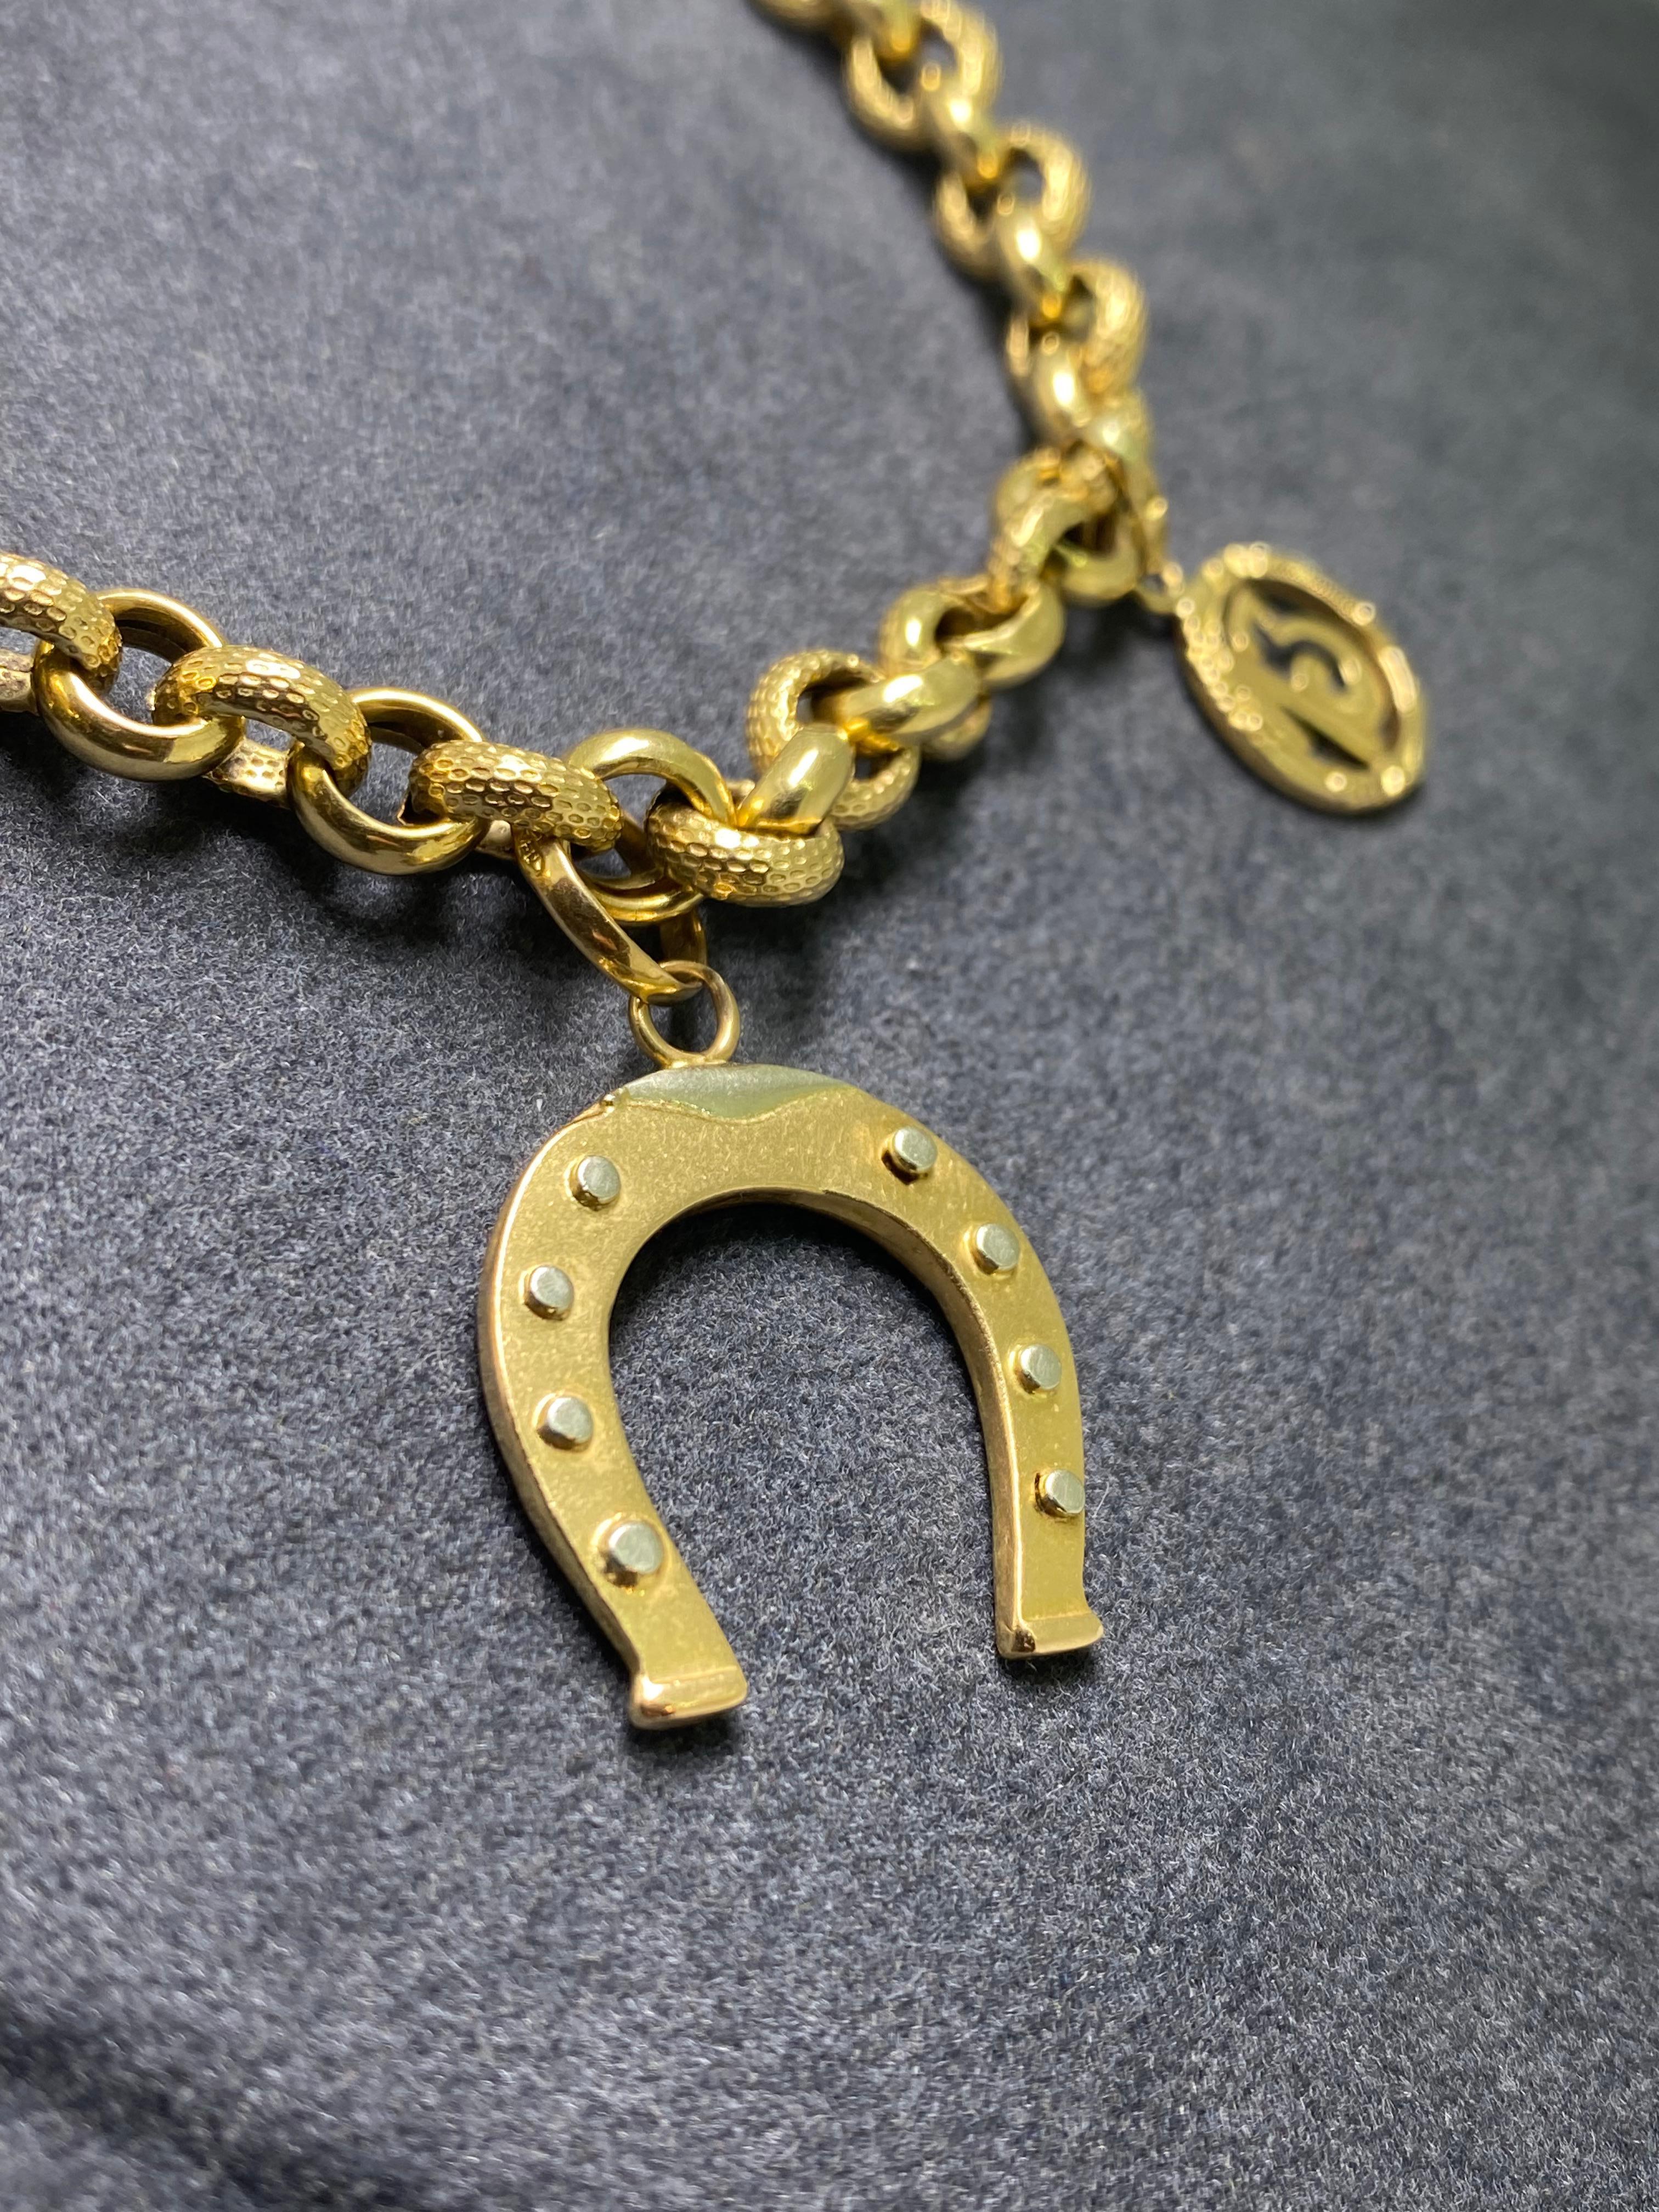 Round Cut 18k Yellow Gold Italian Charm Bracelet: Horseshoe, Ball, Disk, Figure 13 Charms